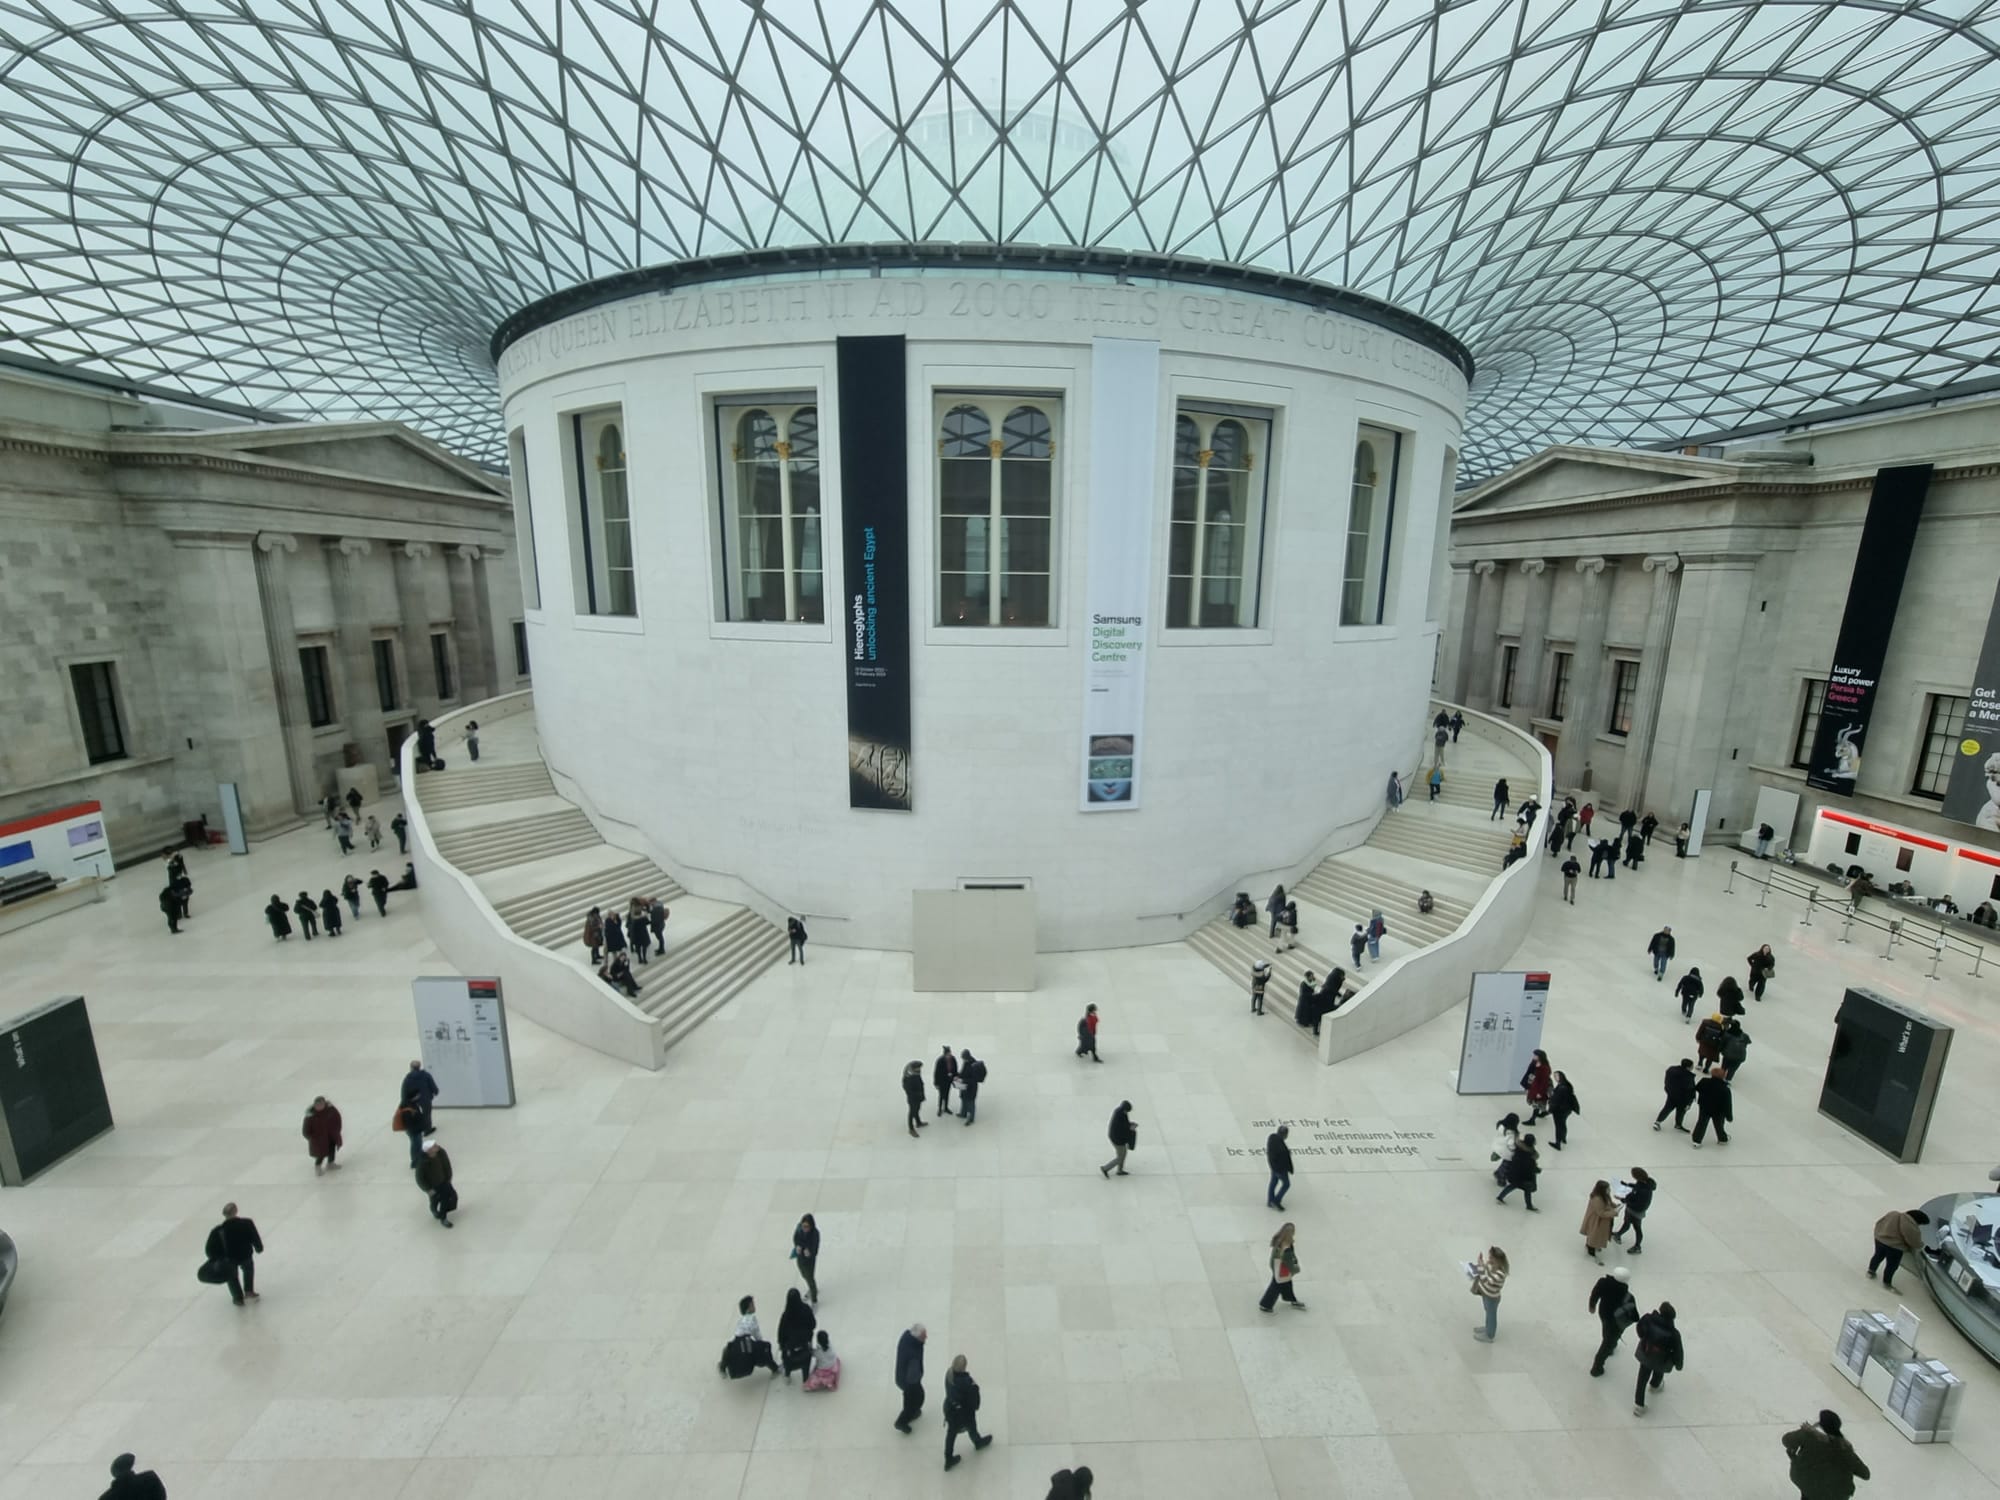 A bird's eye view of the British Museum courtyard.